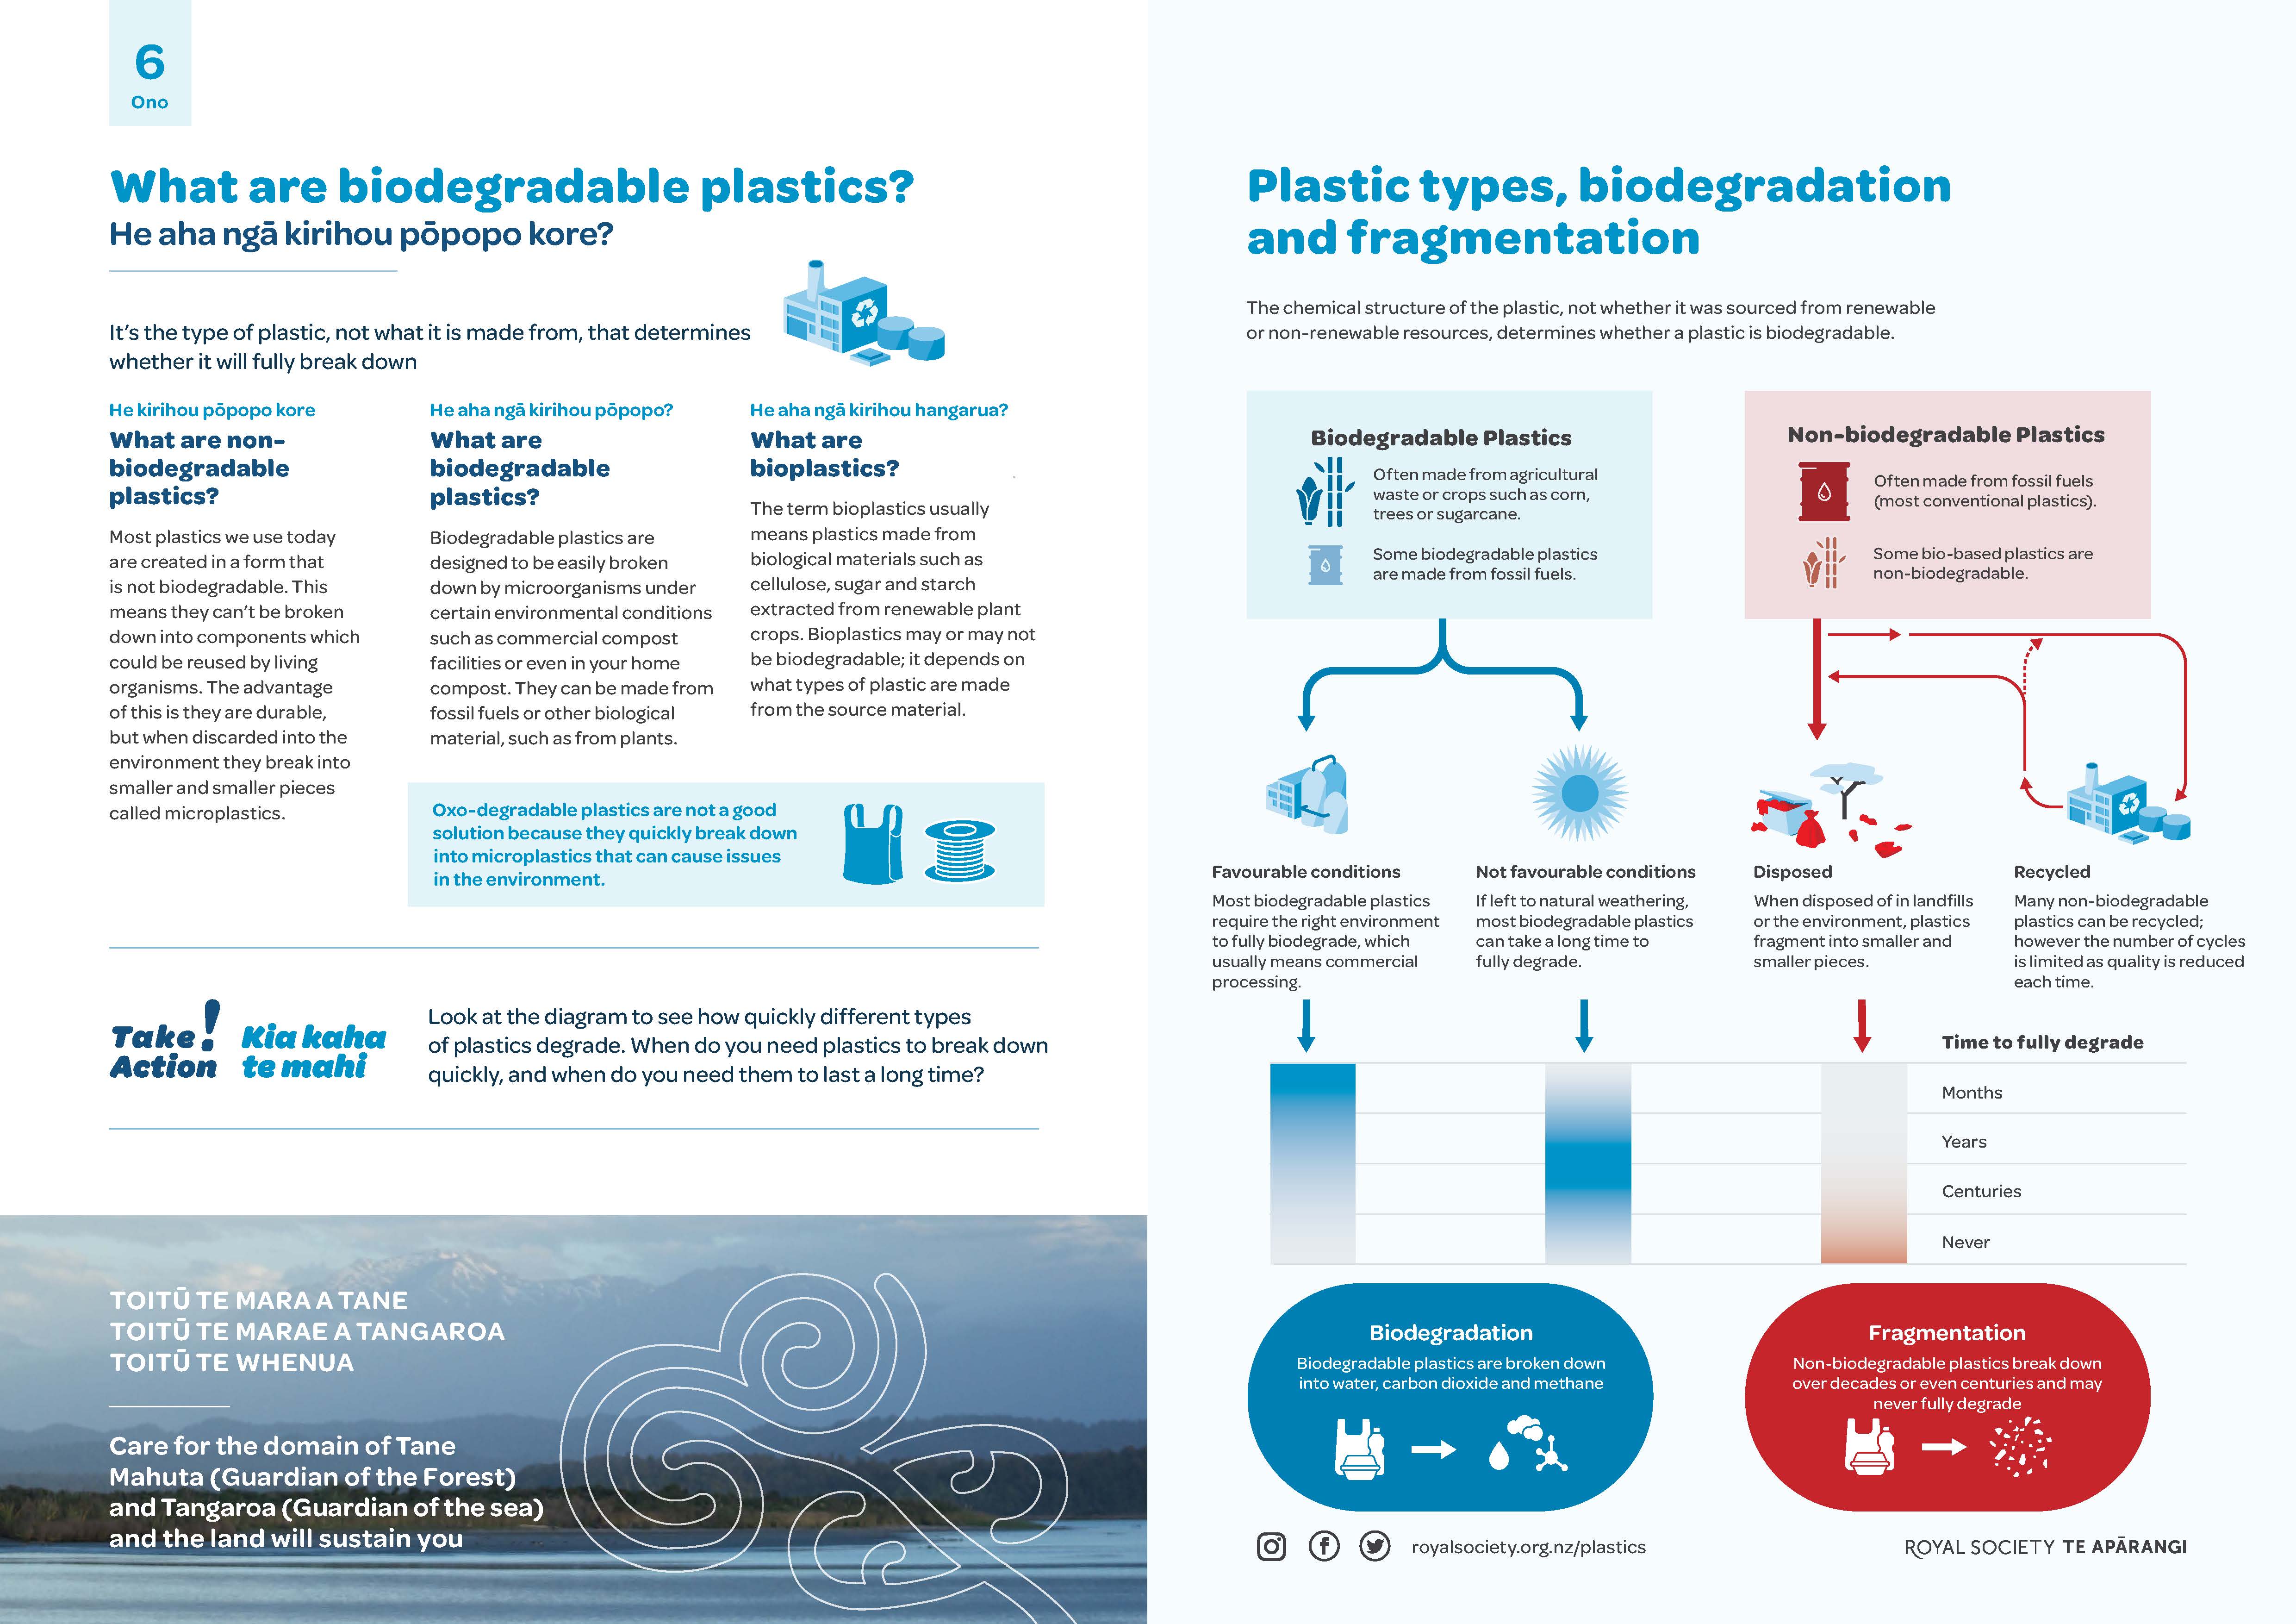 6 Ono biodegradable plastics A3 image